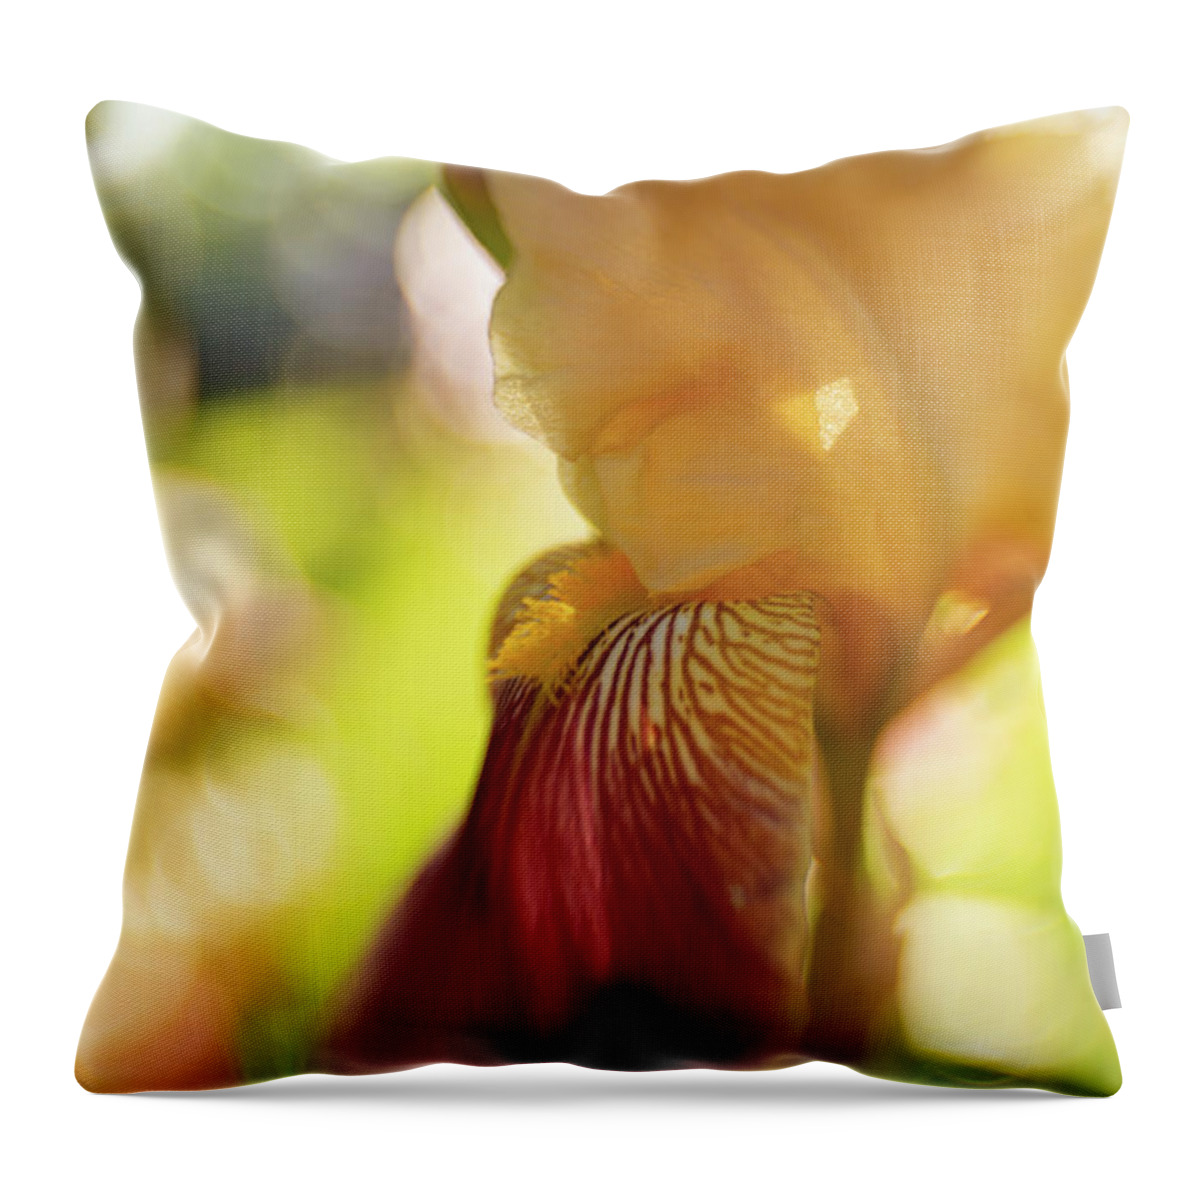 Iris Throw Pillow featuring the photograph Burgundy dreams by Pamela Taylor